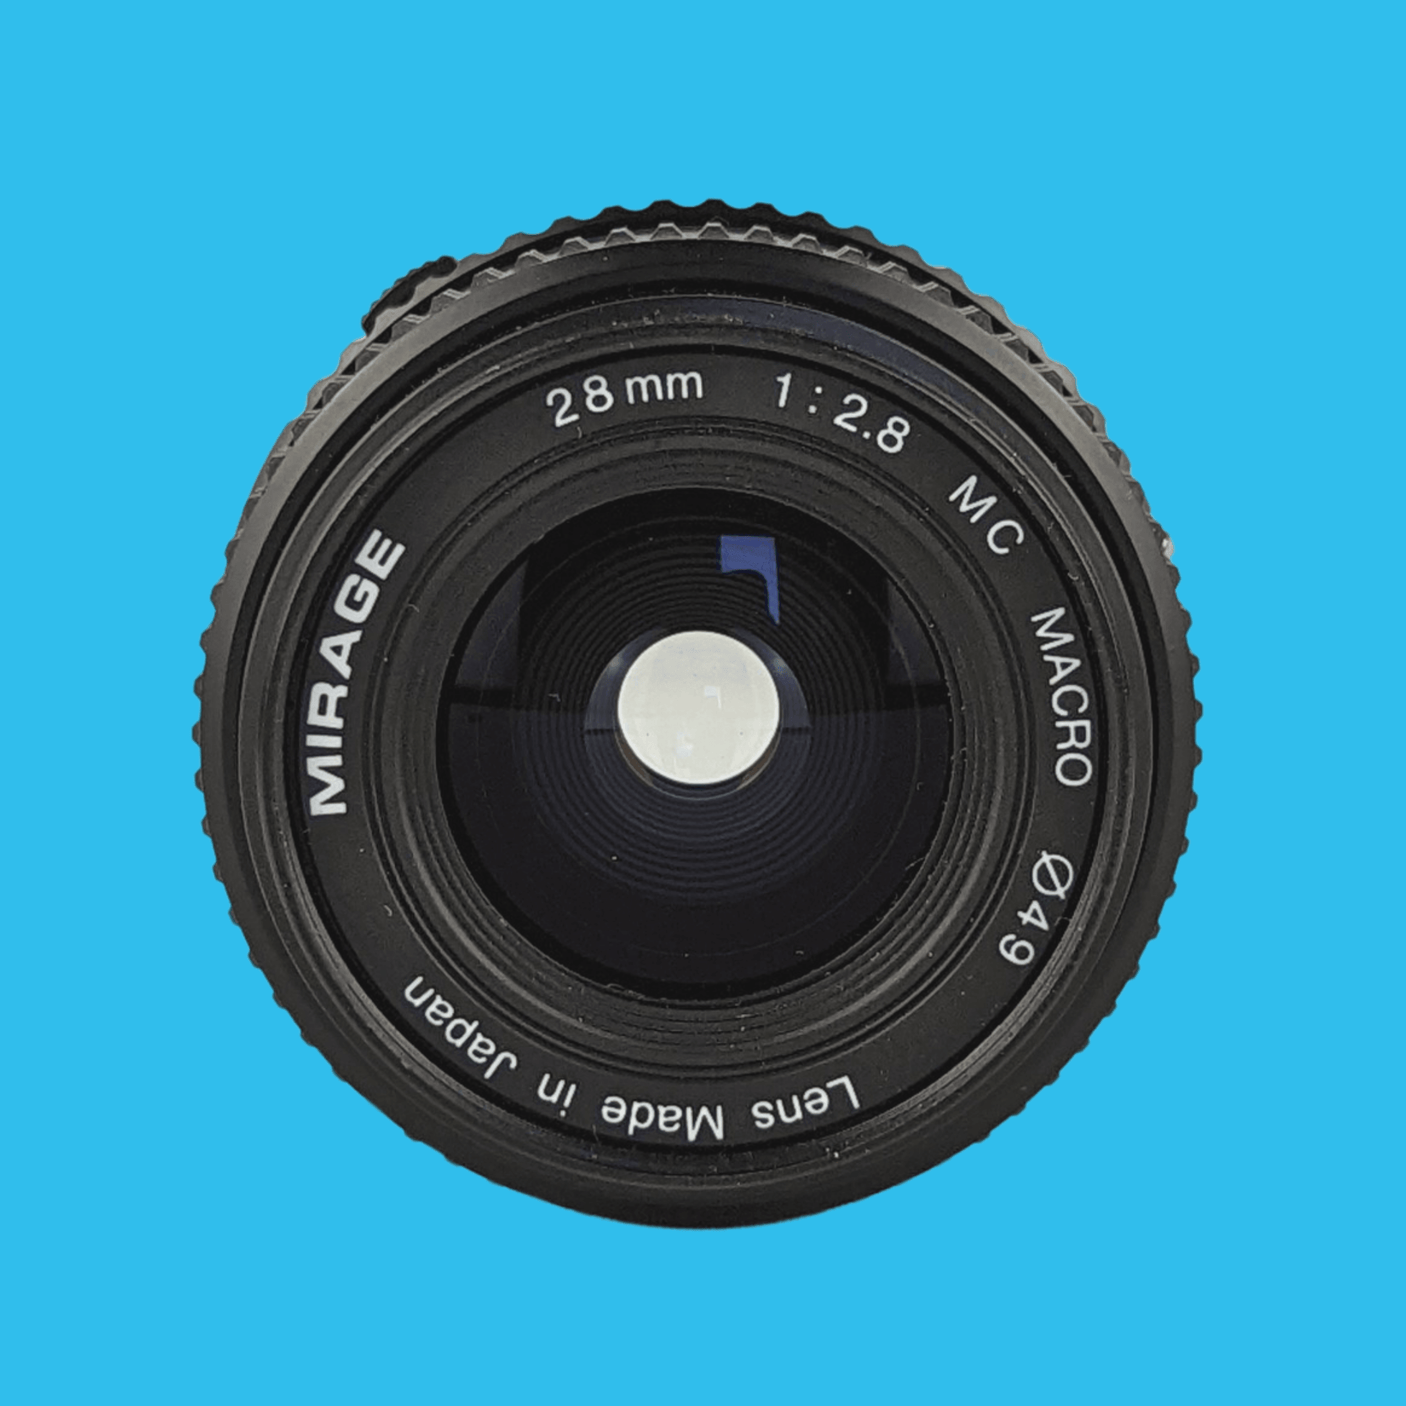 Mirage Macro 28mm f/2.8 Camera Lens